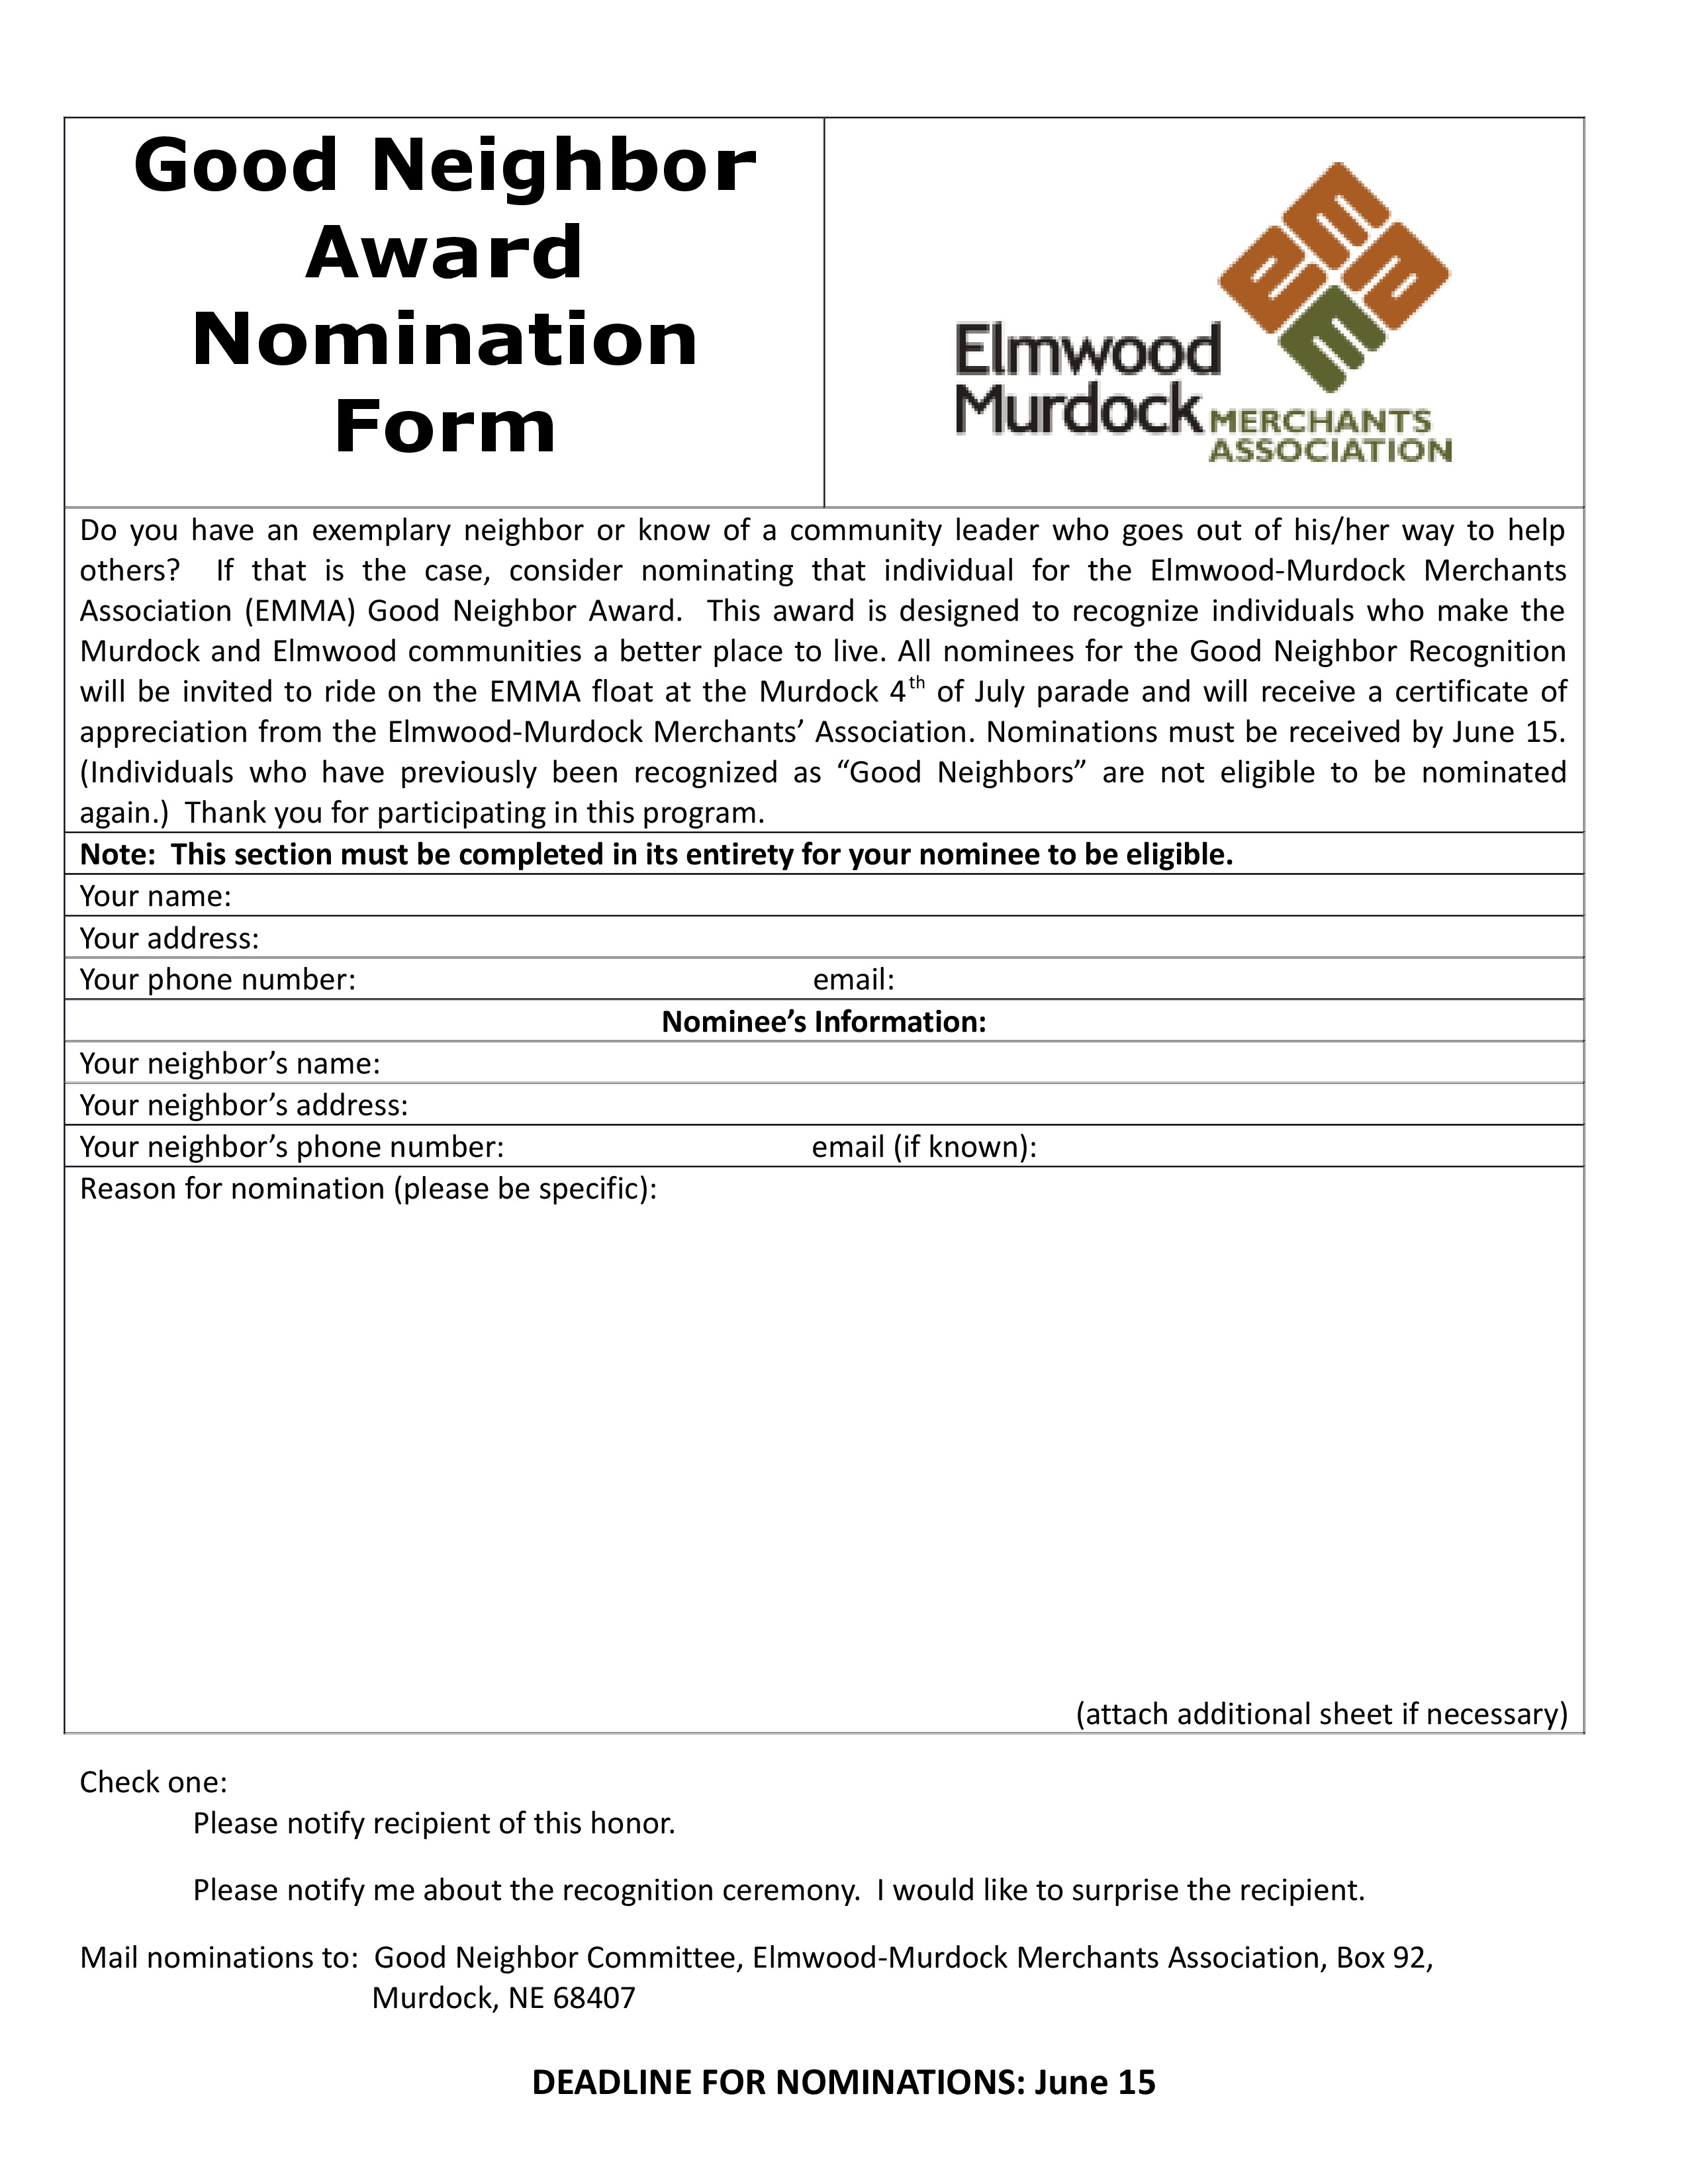 Good Neighbor Award Nomination Form page 0